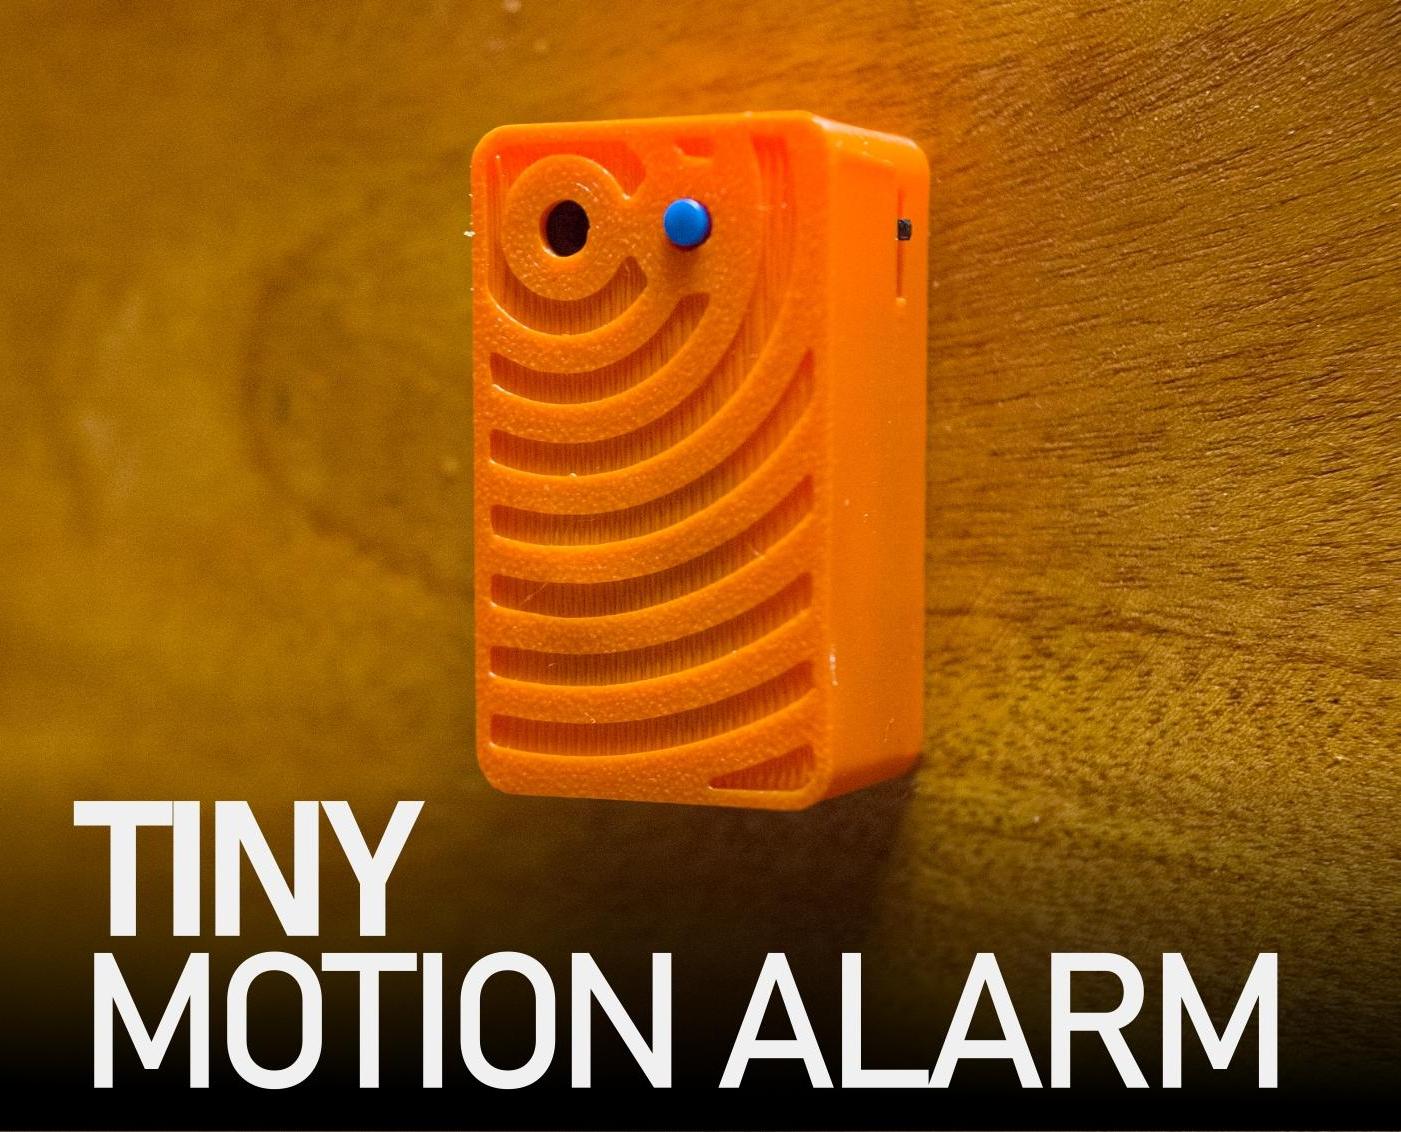 Tiny Motion Detection Alarm